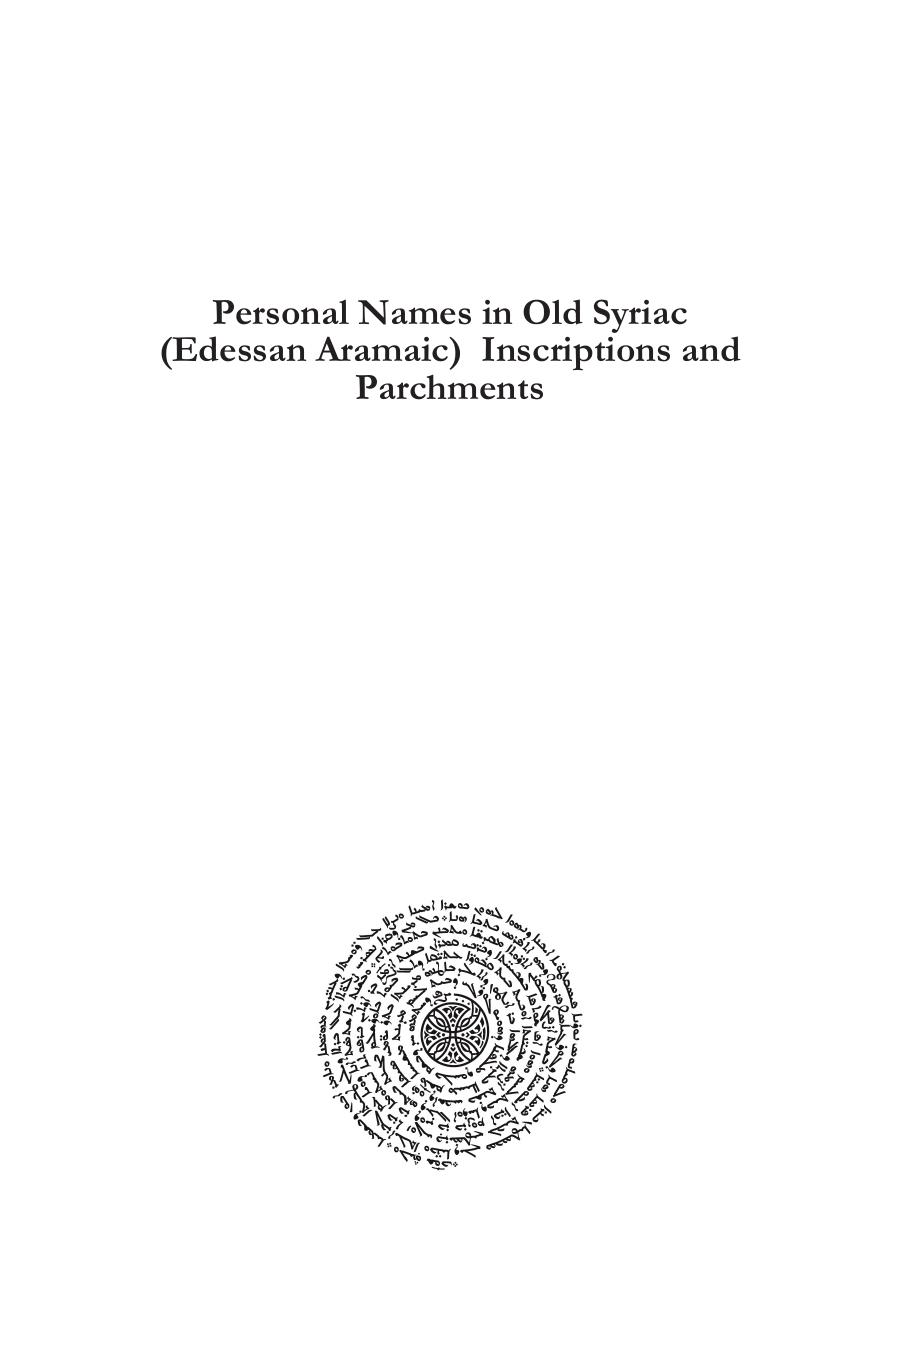 Personal Names in Old Syriac (Edessan Aramaic) Inscriptions and Parchments (Gorgias Eastern Christian Studies) by Adil H. Al-Jadir